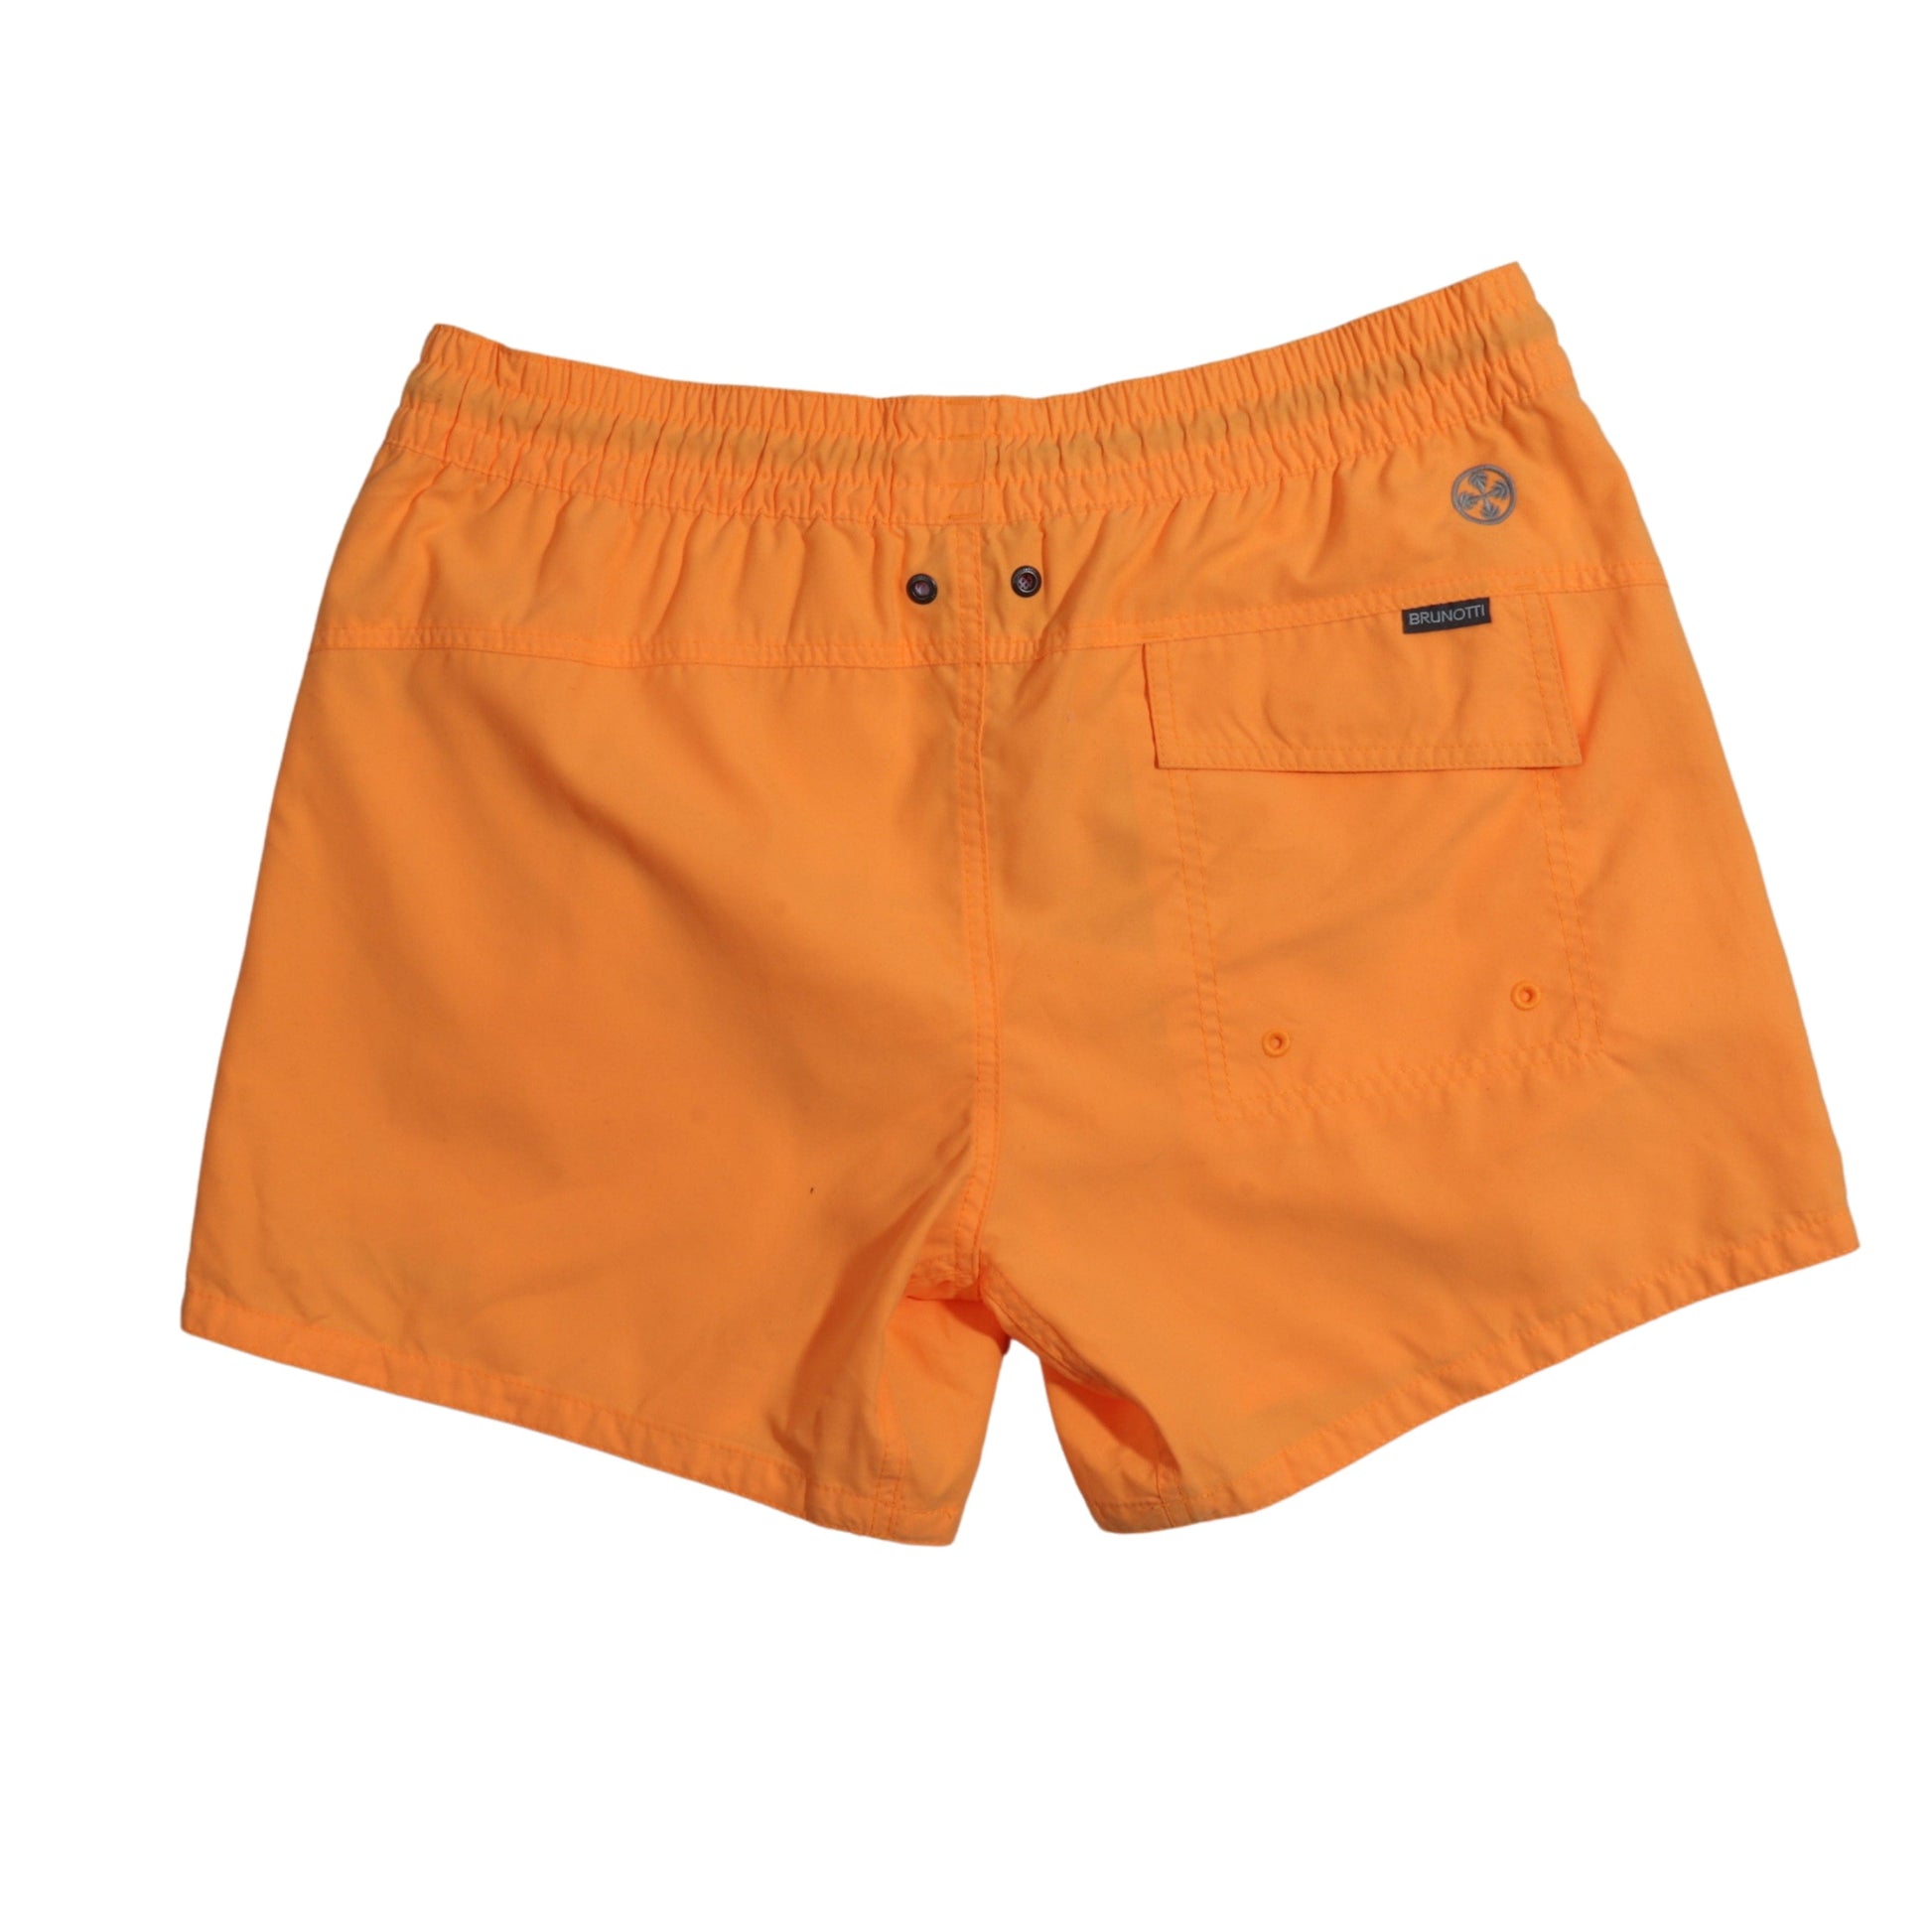 BRUNOTTI Mens Swimwear L / Orange BRUNOTTI - Simple Short Swimwear